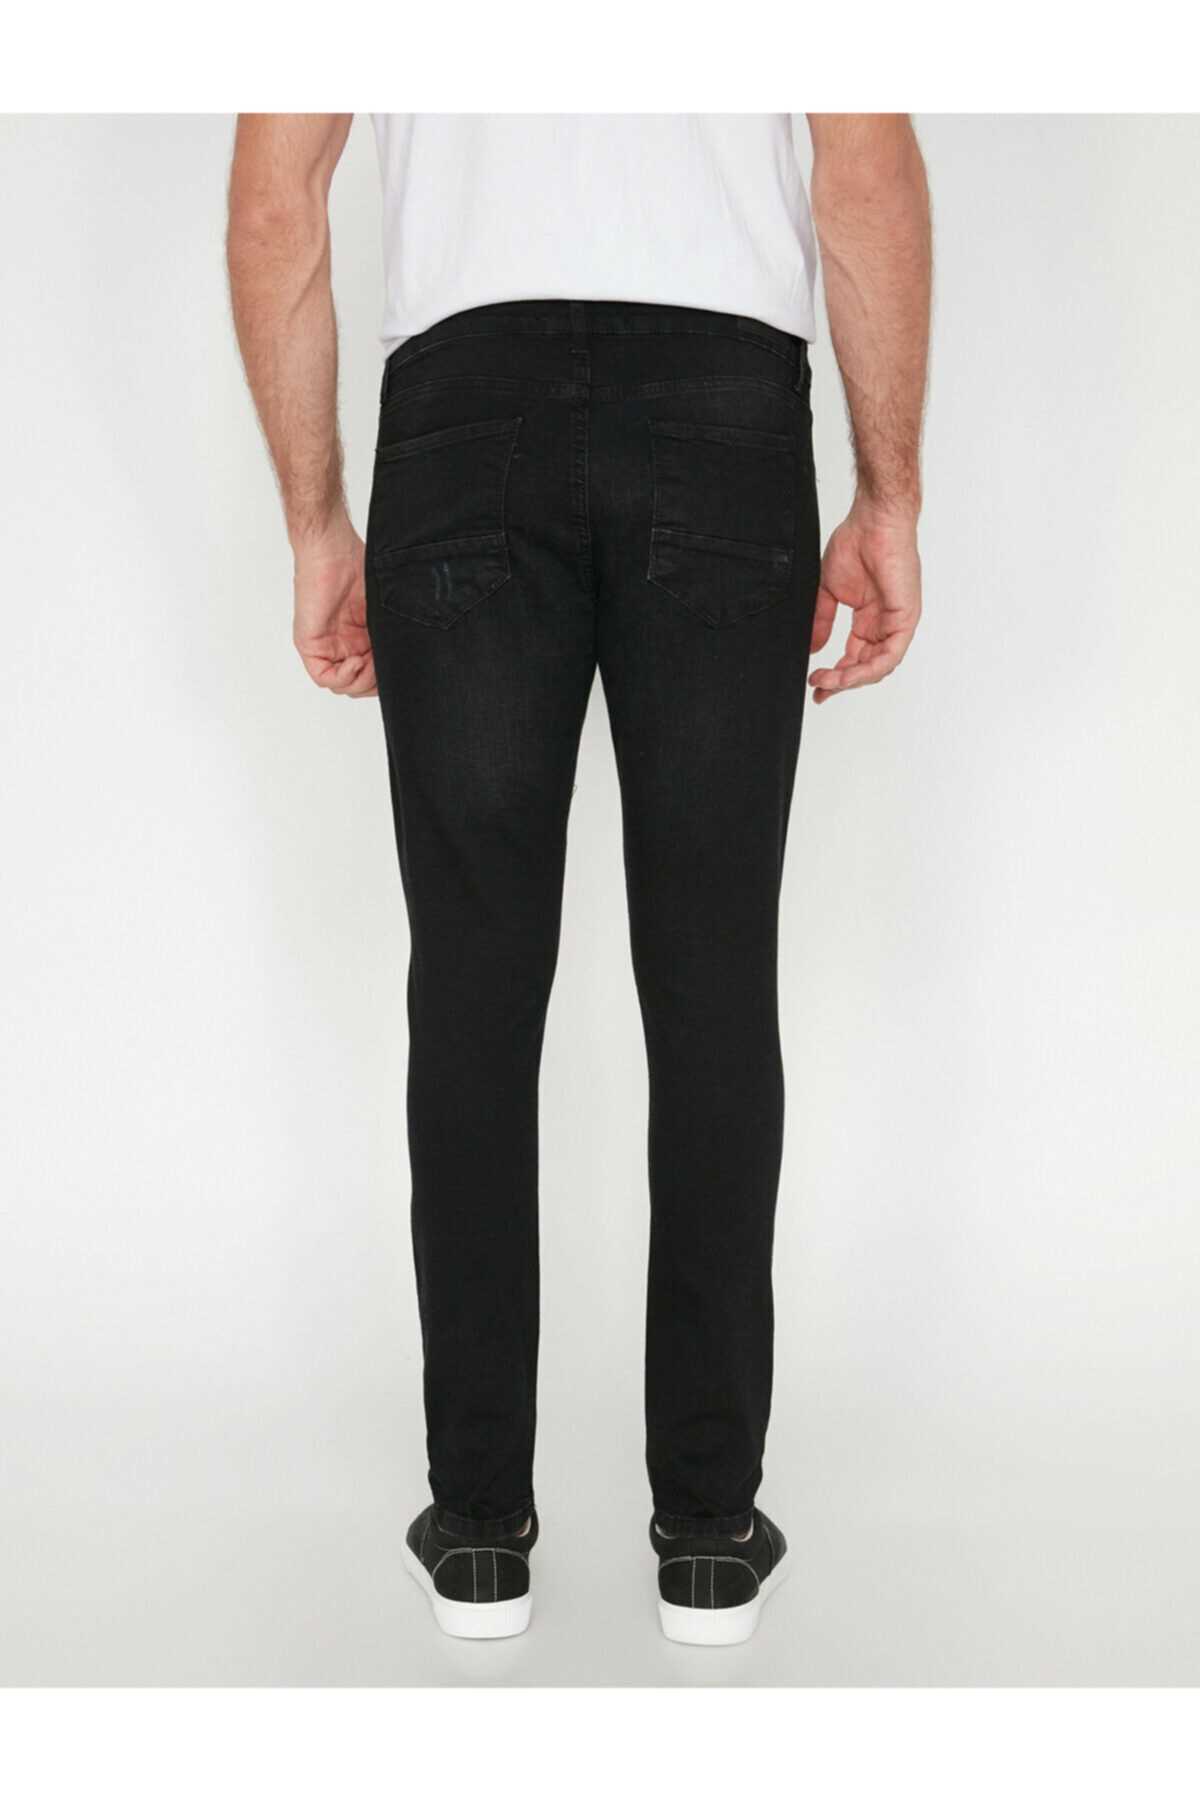 خرید پستی شلوار جین مردانه جدید برند کوتون رنگ مشکی کد ty31715123